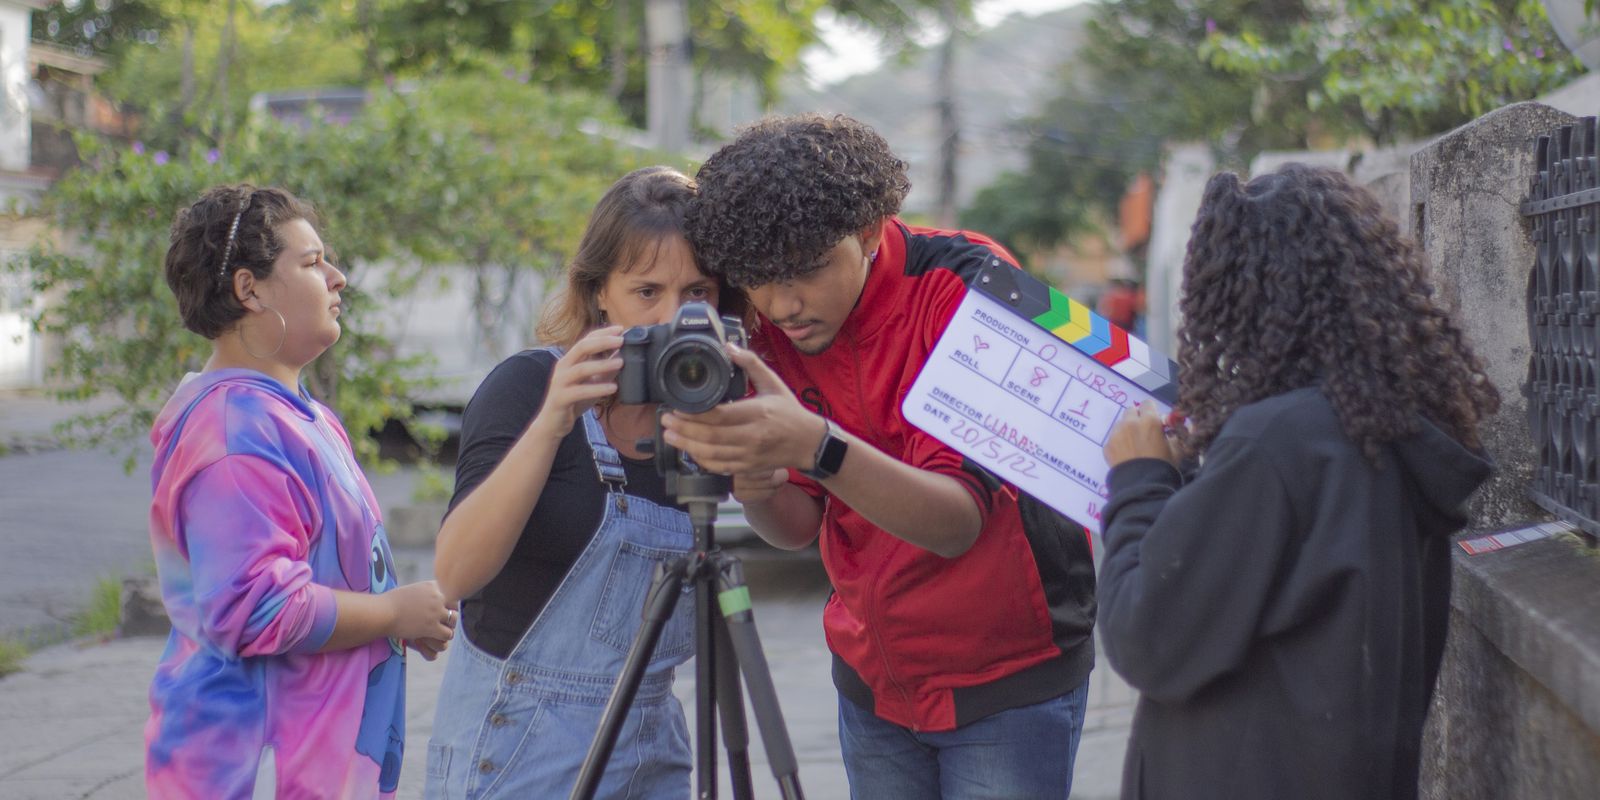 Public school students participate in a film festival in France